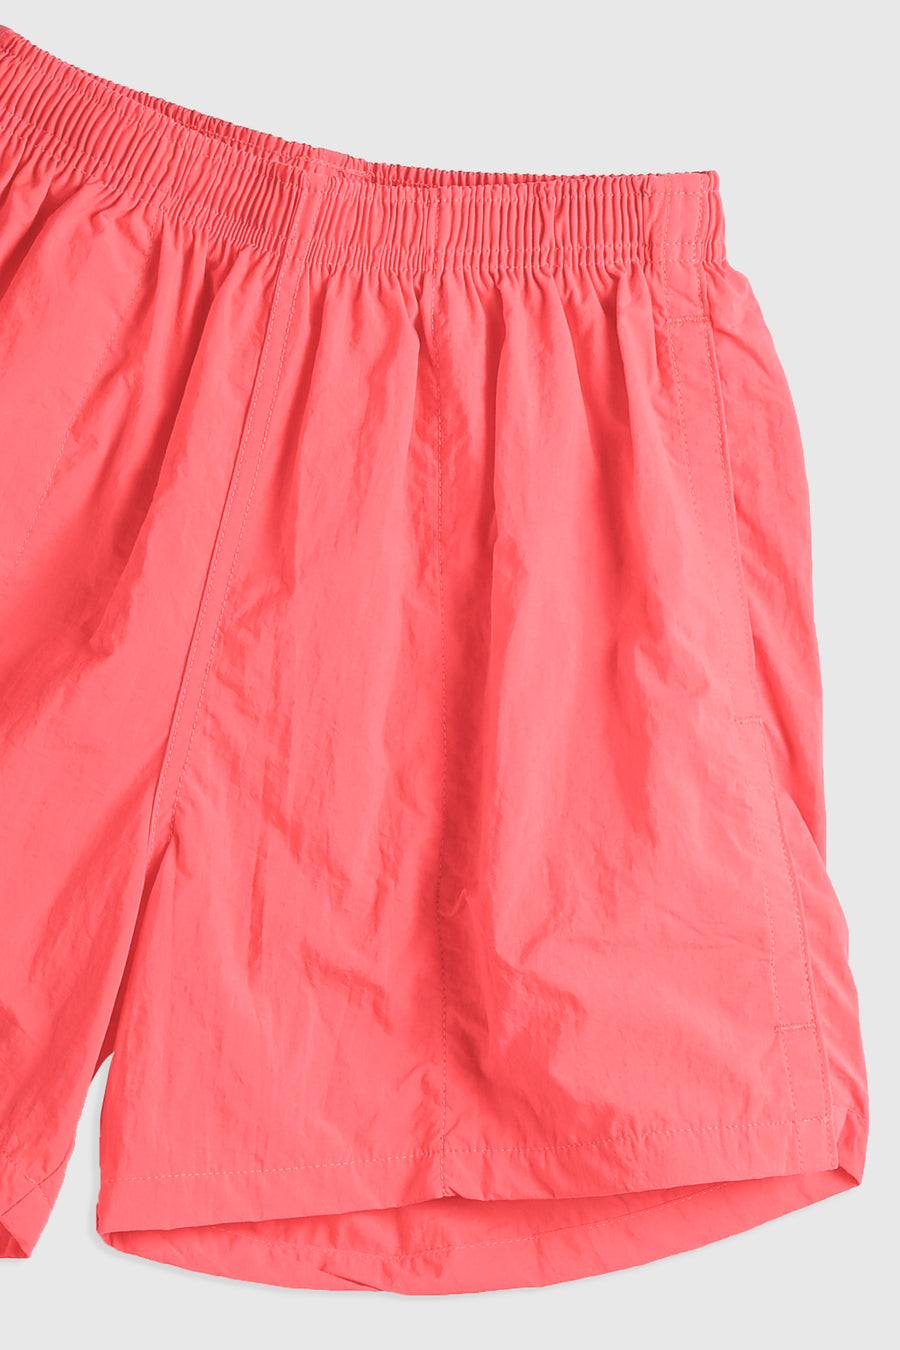 Deadstock Sport Mode Nylon Shorts - Purple, Neon Yellow, Orange, Pink, Black